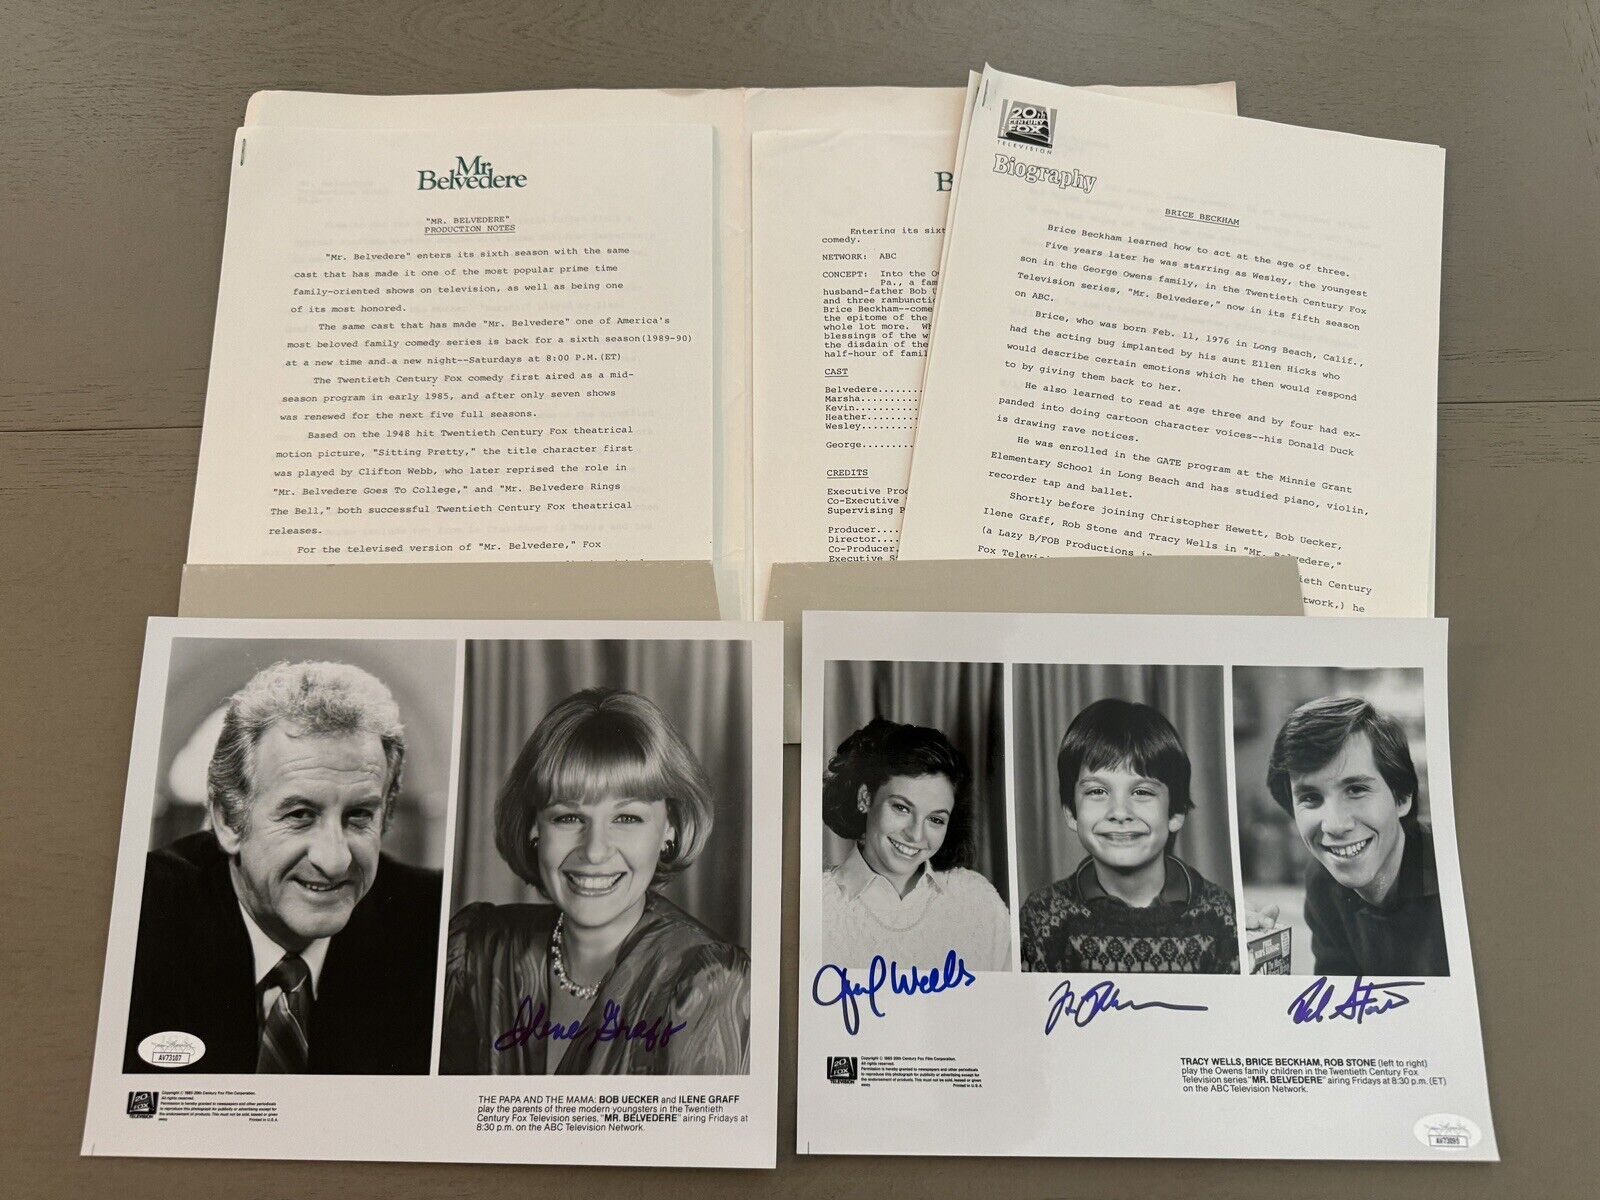 Mr. Belvedere TV Show Original Promo/Press Kit Autograph Signed by Cast Members